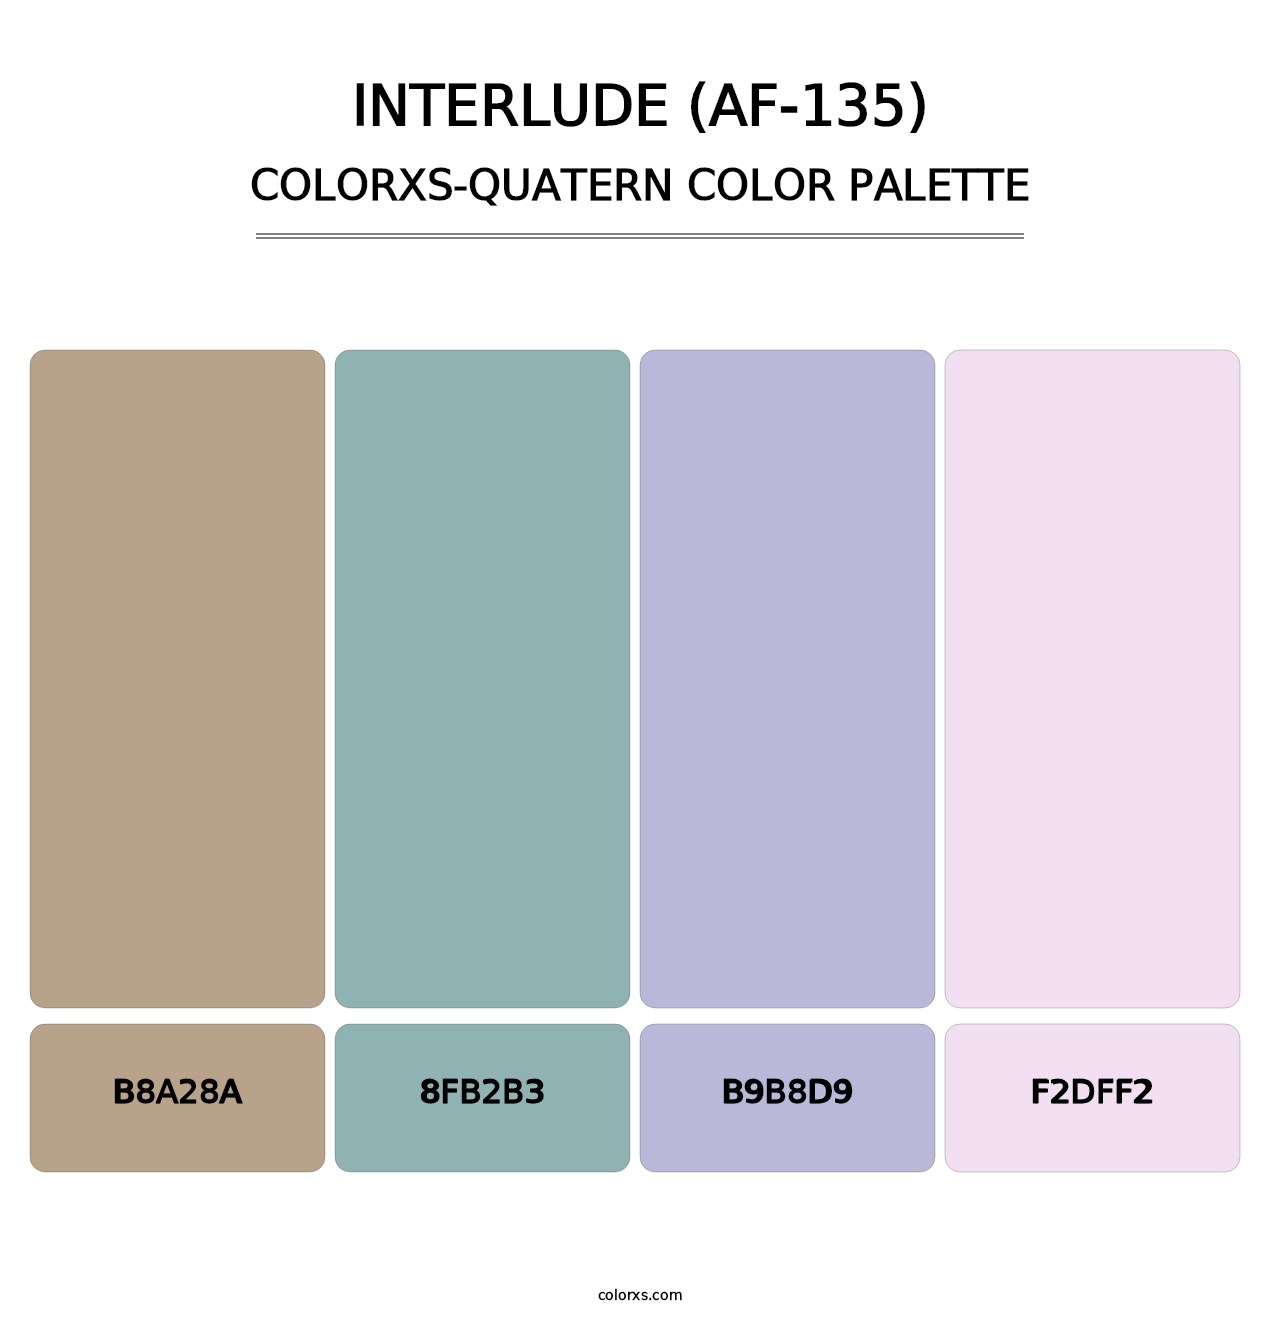 Interlude (AF-135) - Colorxs Quatern Palette